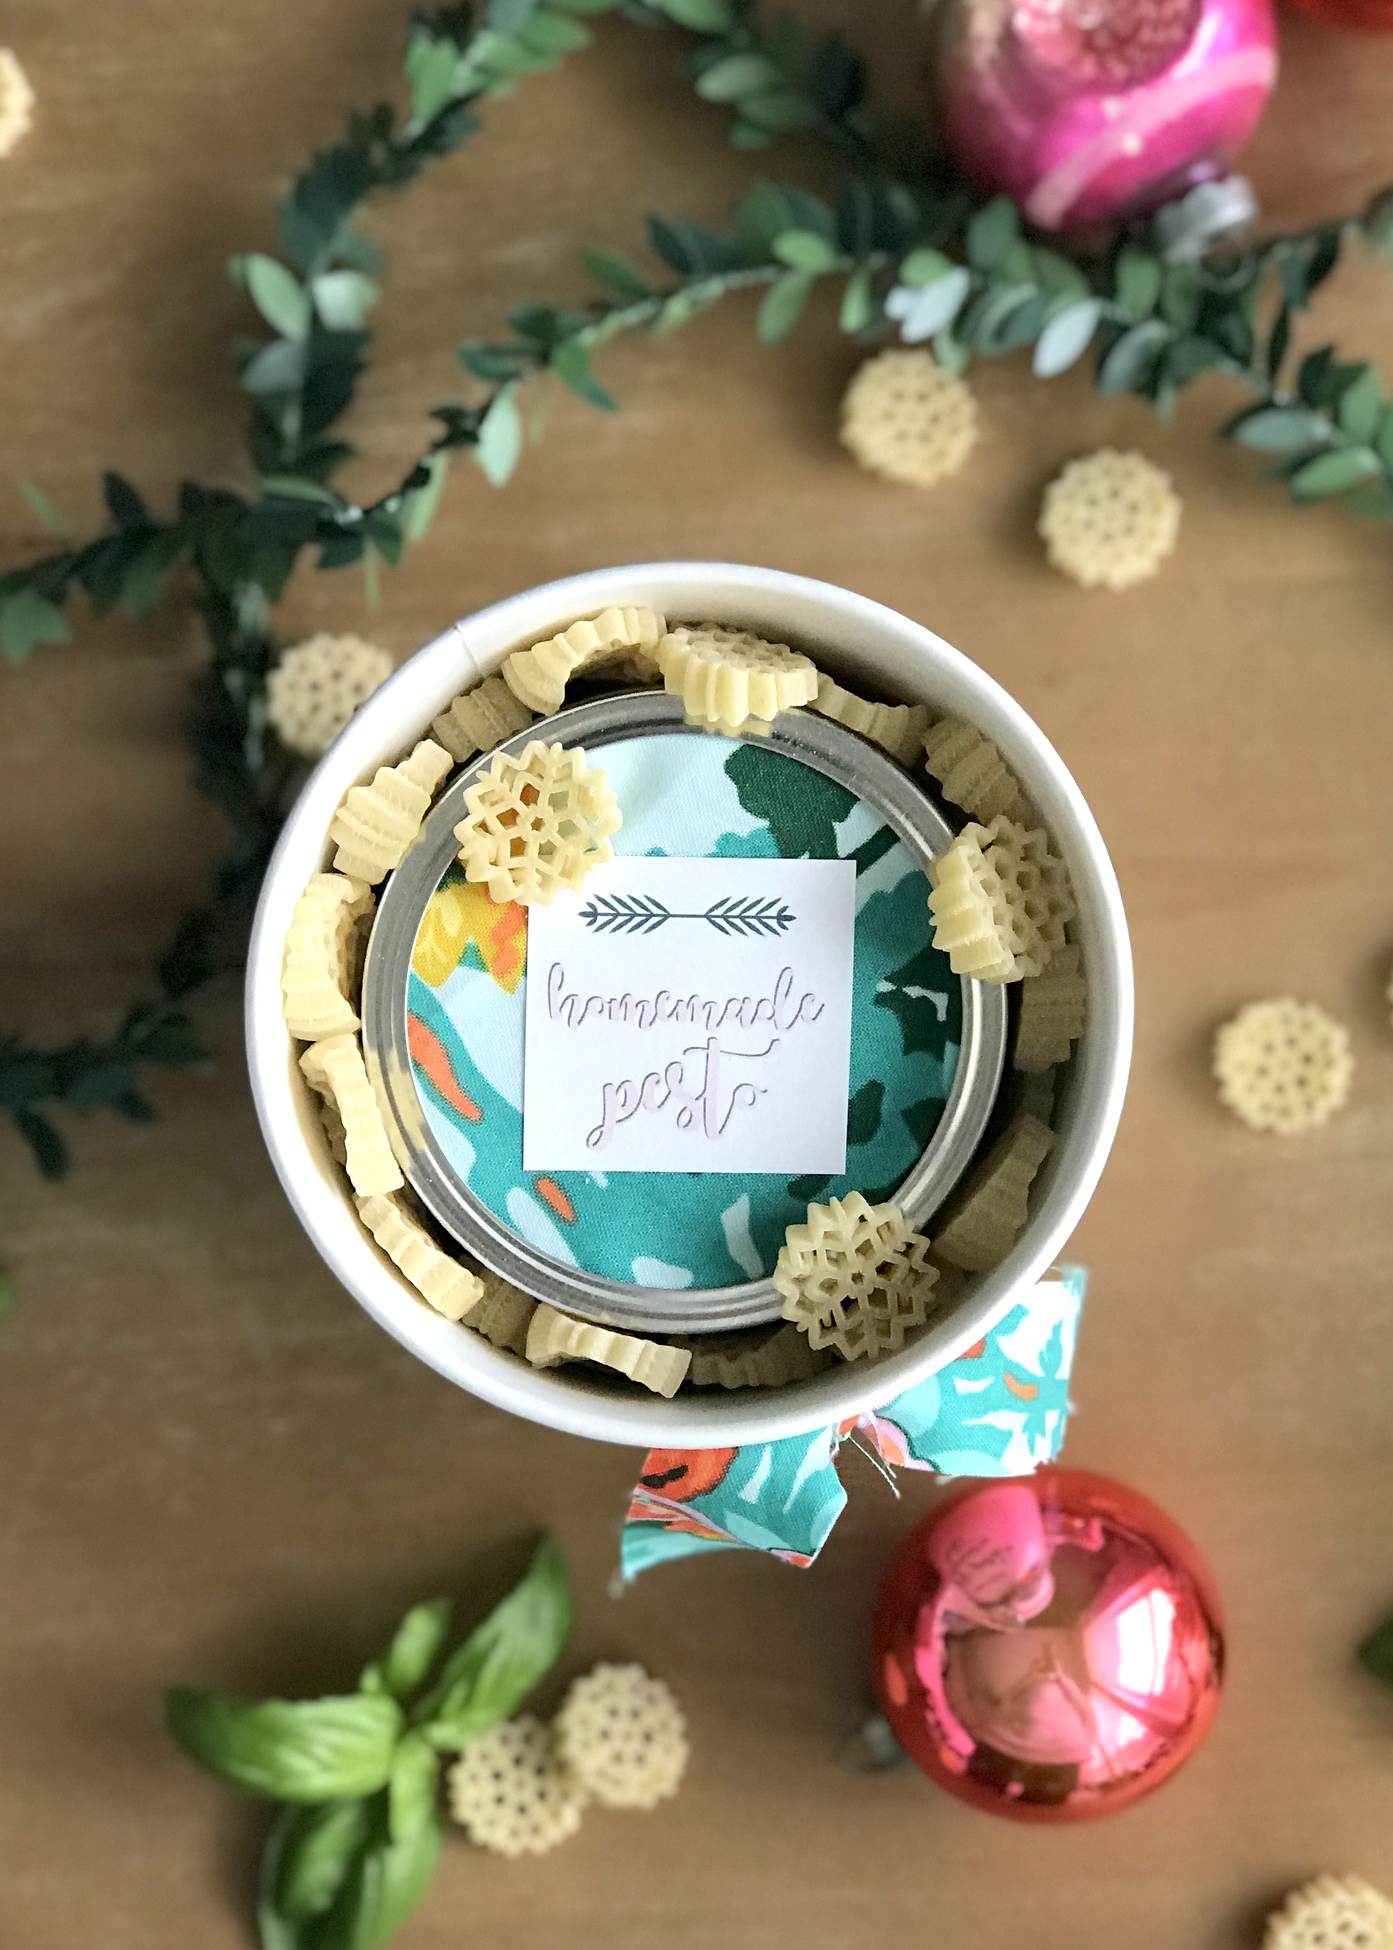 edible Christmas gift idea- pesto pasta dinner kit